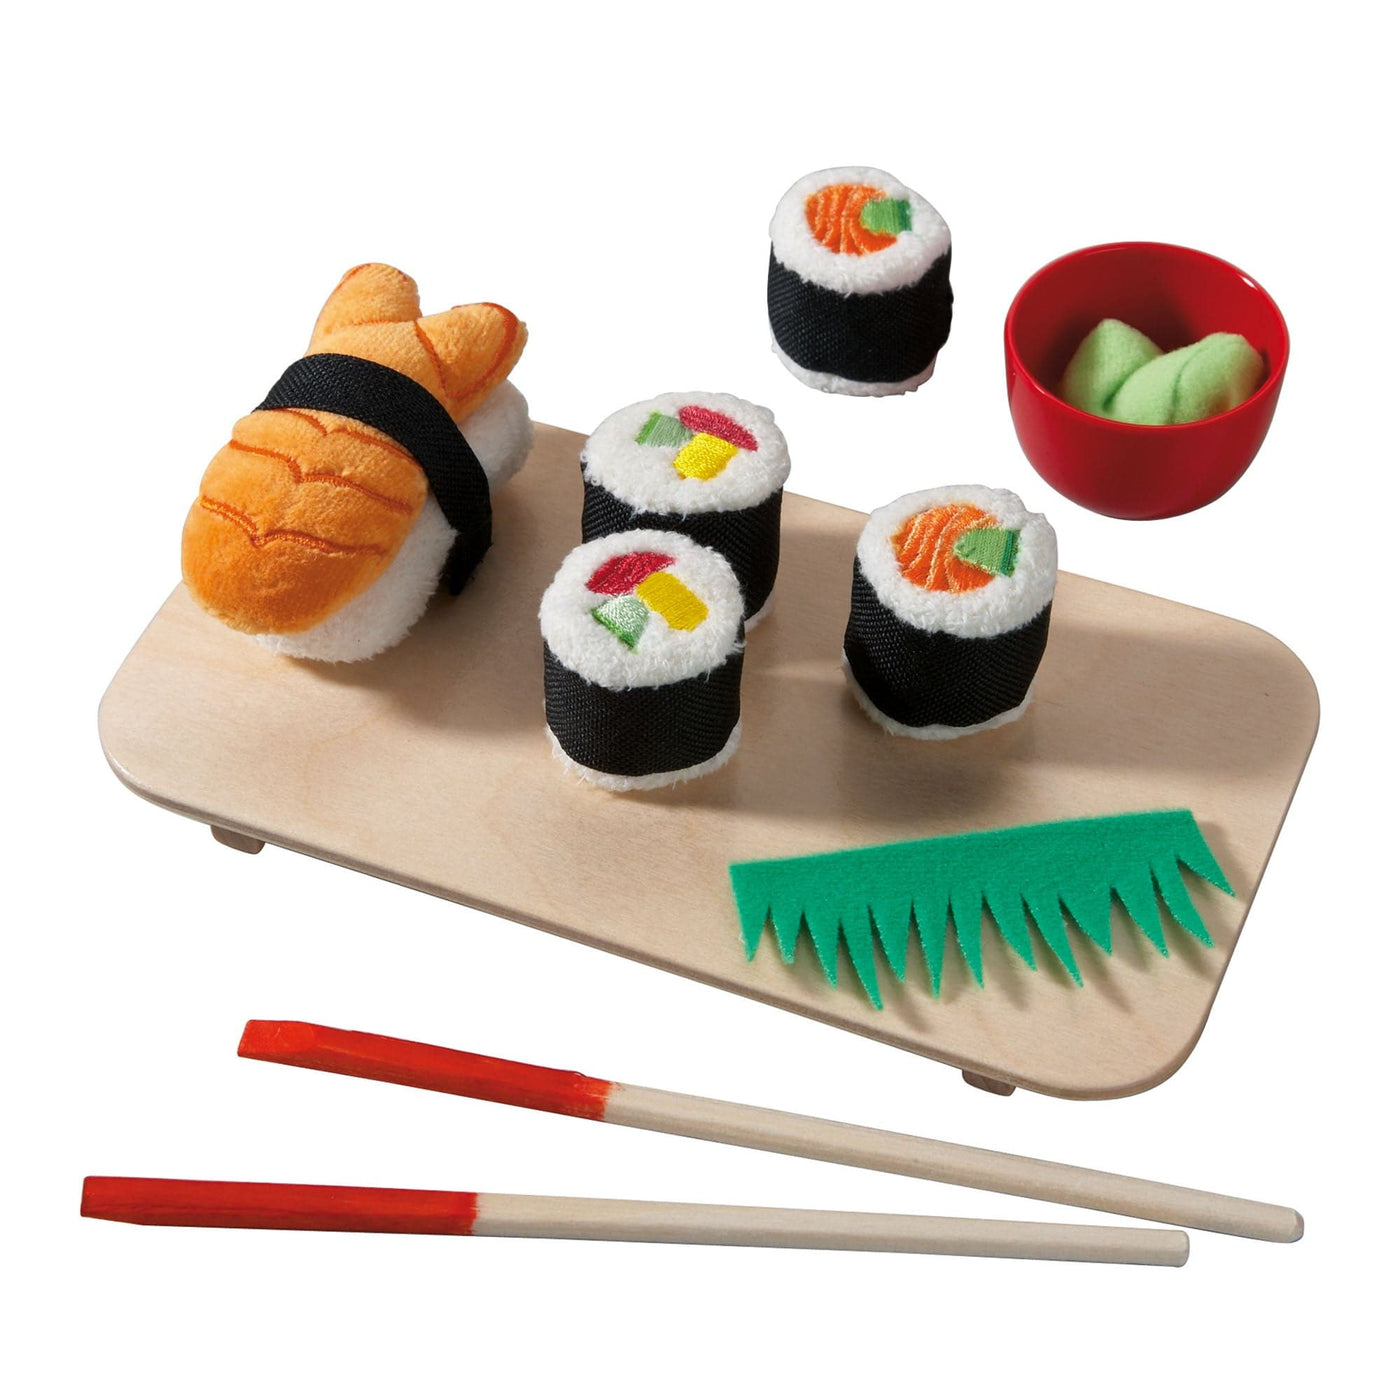 Biofino Sushi Set Soft Play Food - HABA USA